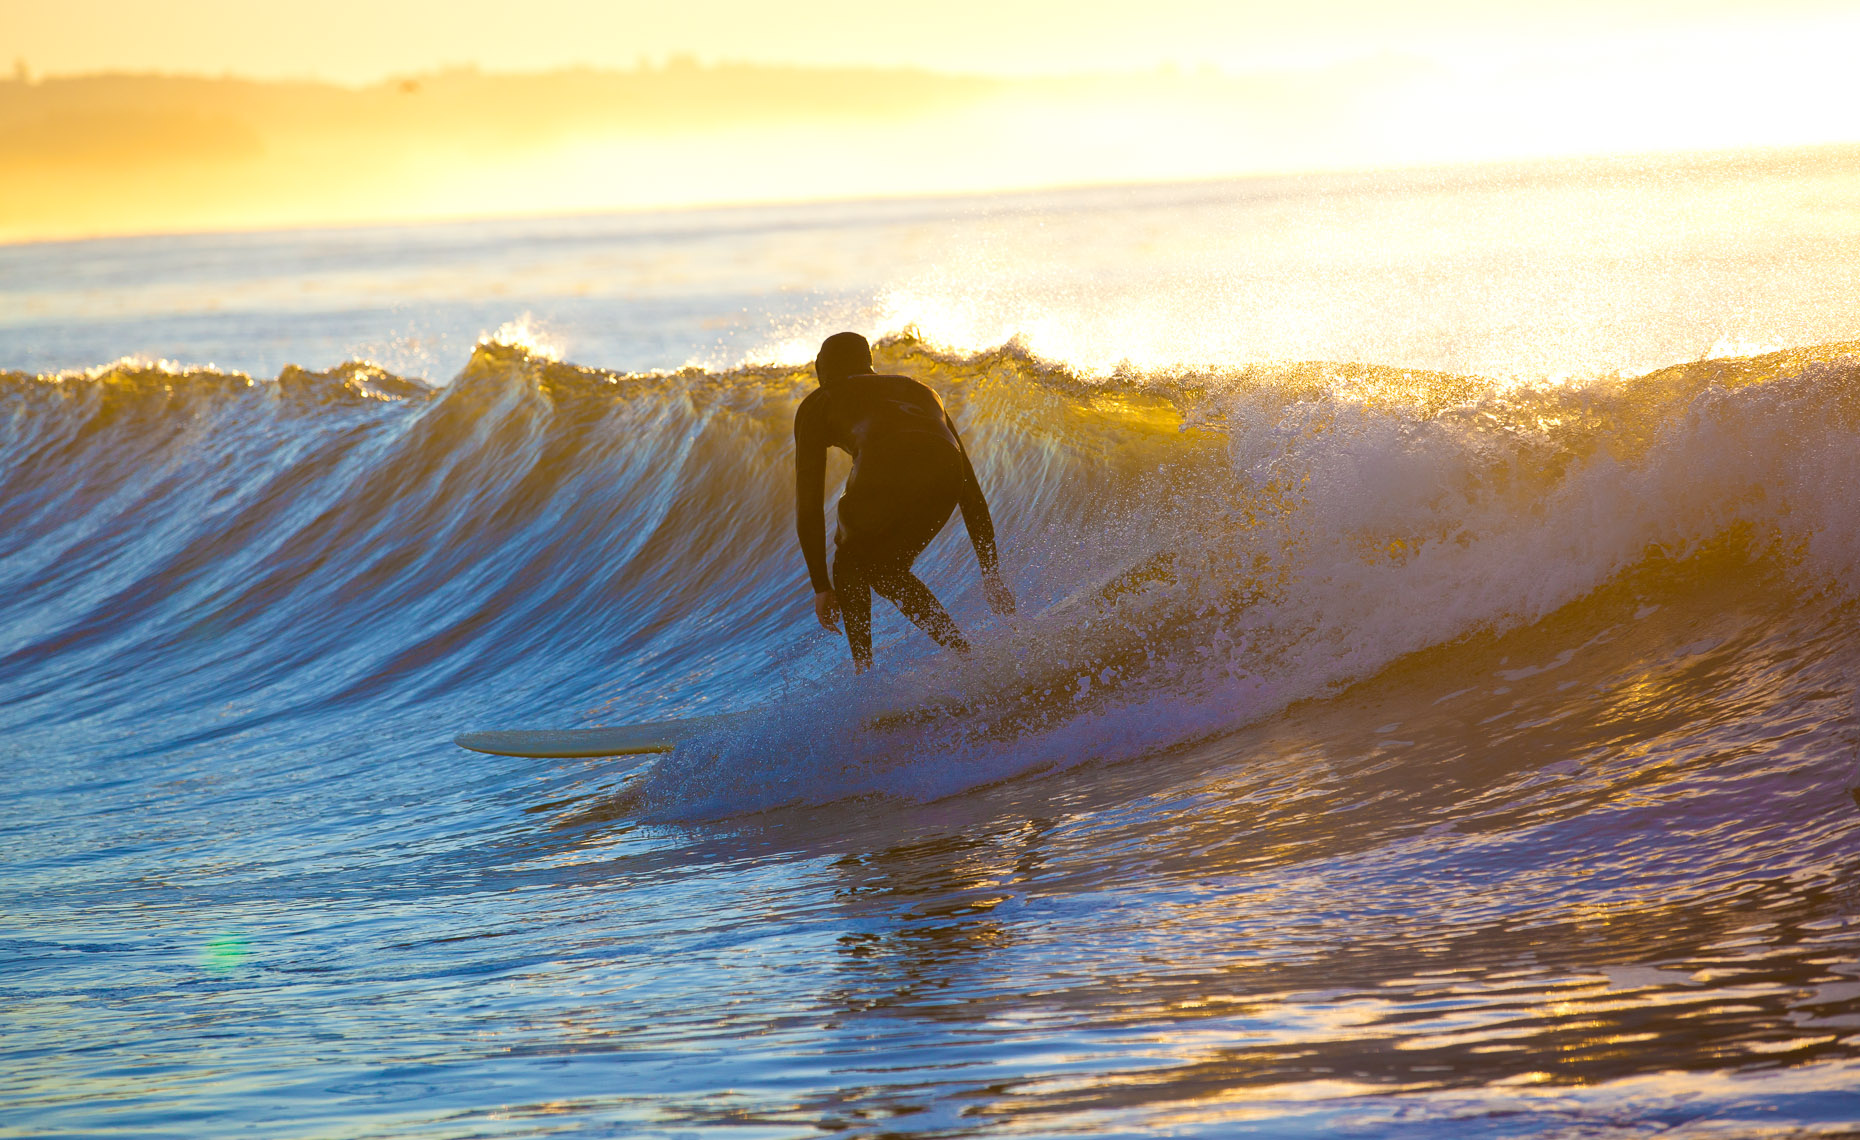 Wooden longboard surfer surfing at sunrise